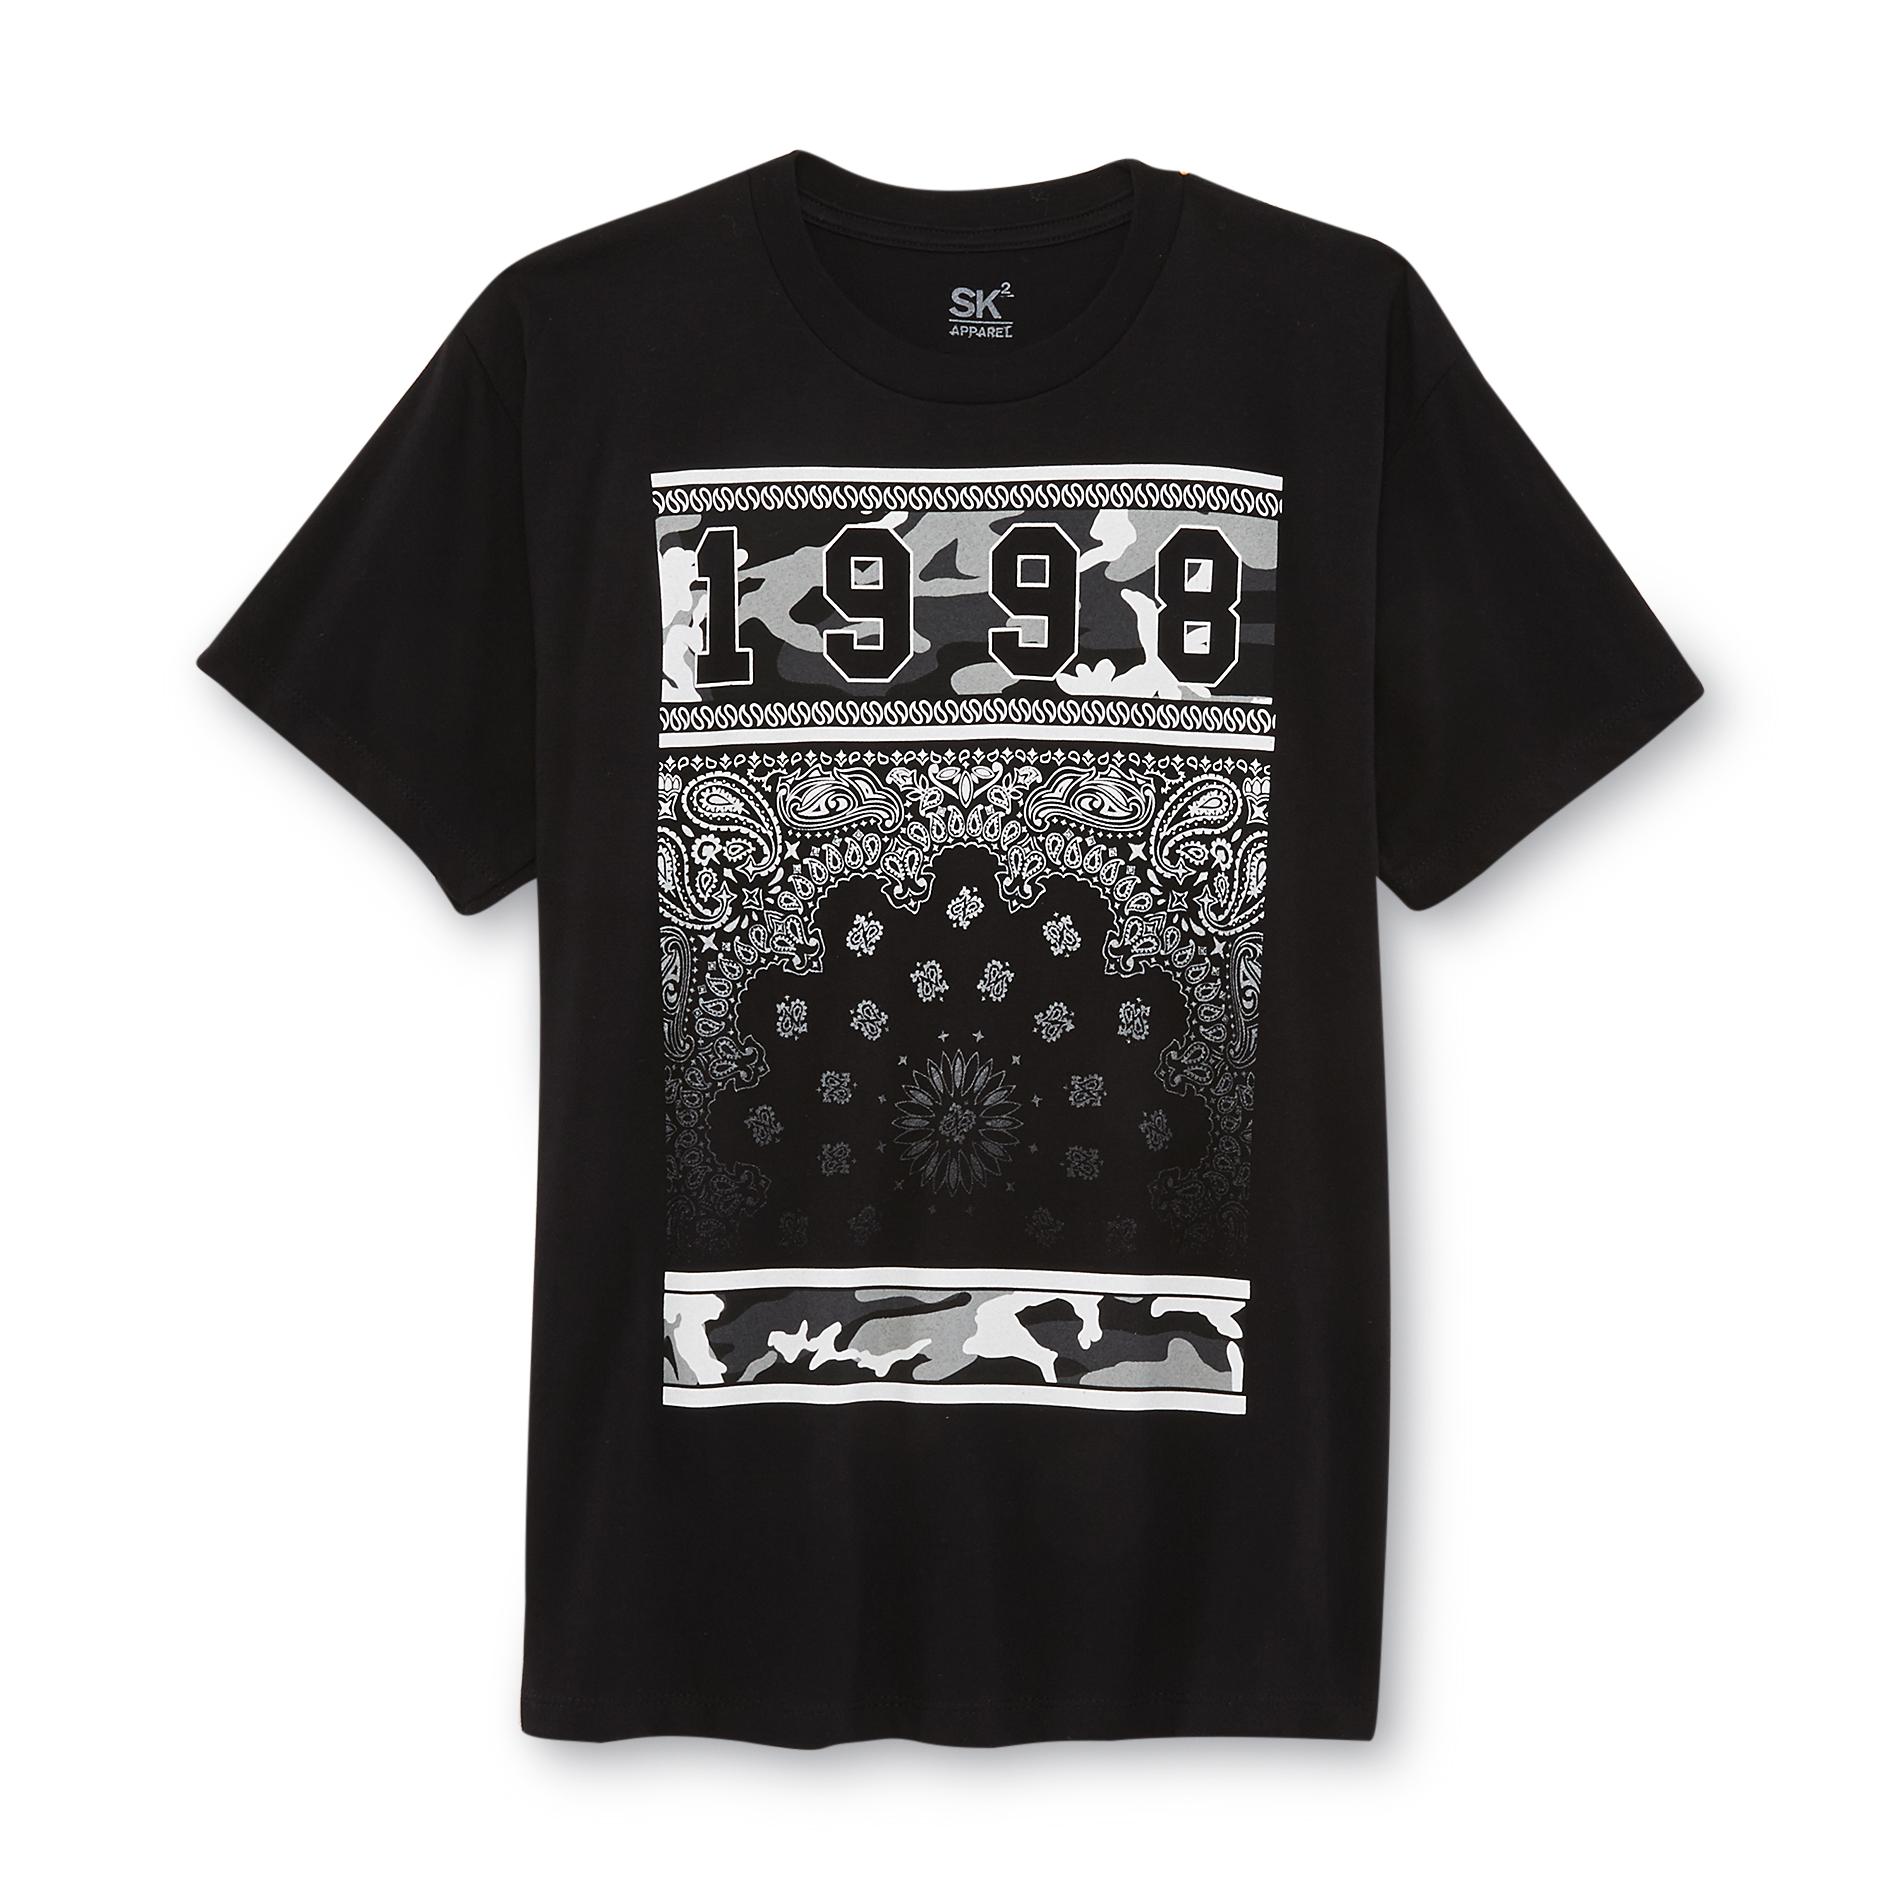 SK2 Boy's Graphic T-Shirt - Bandana Print